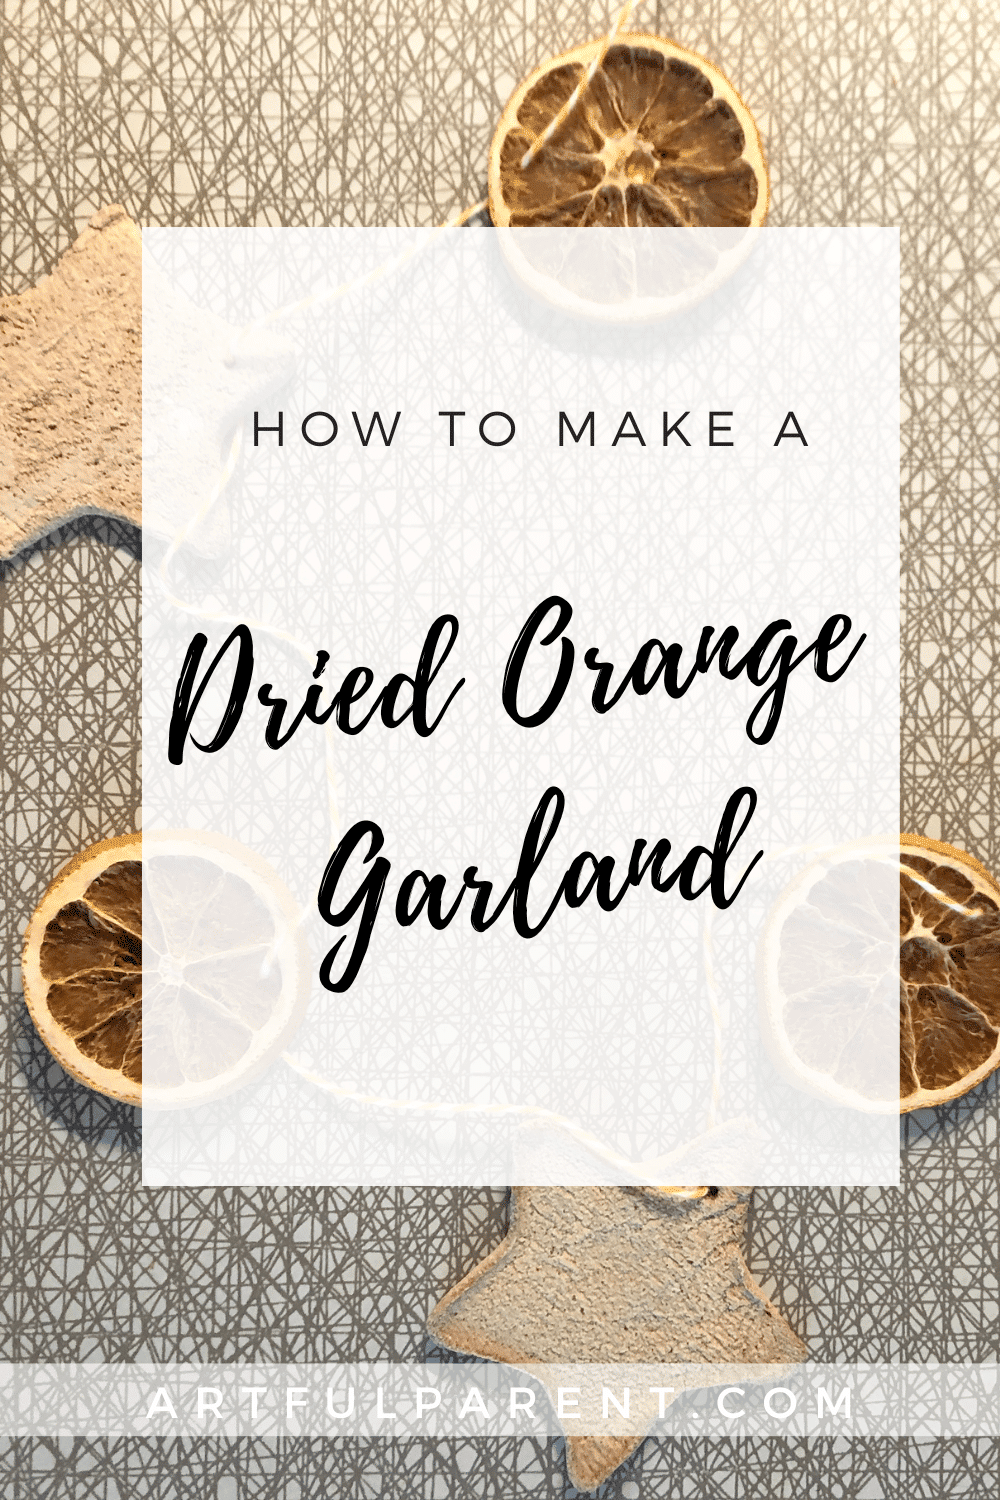 How to Make a Dried Orange Garland